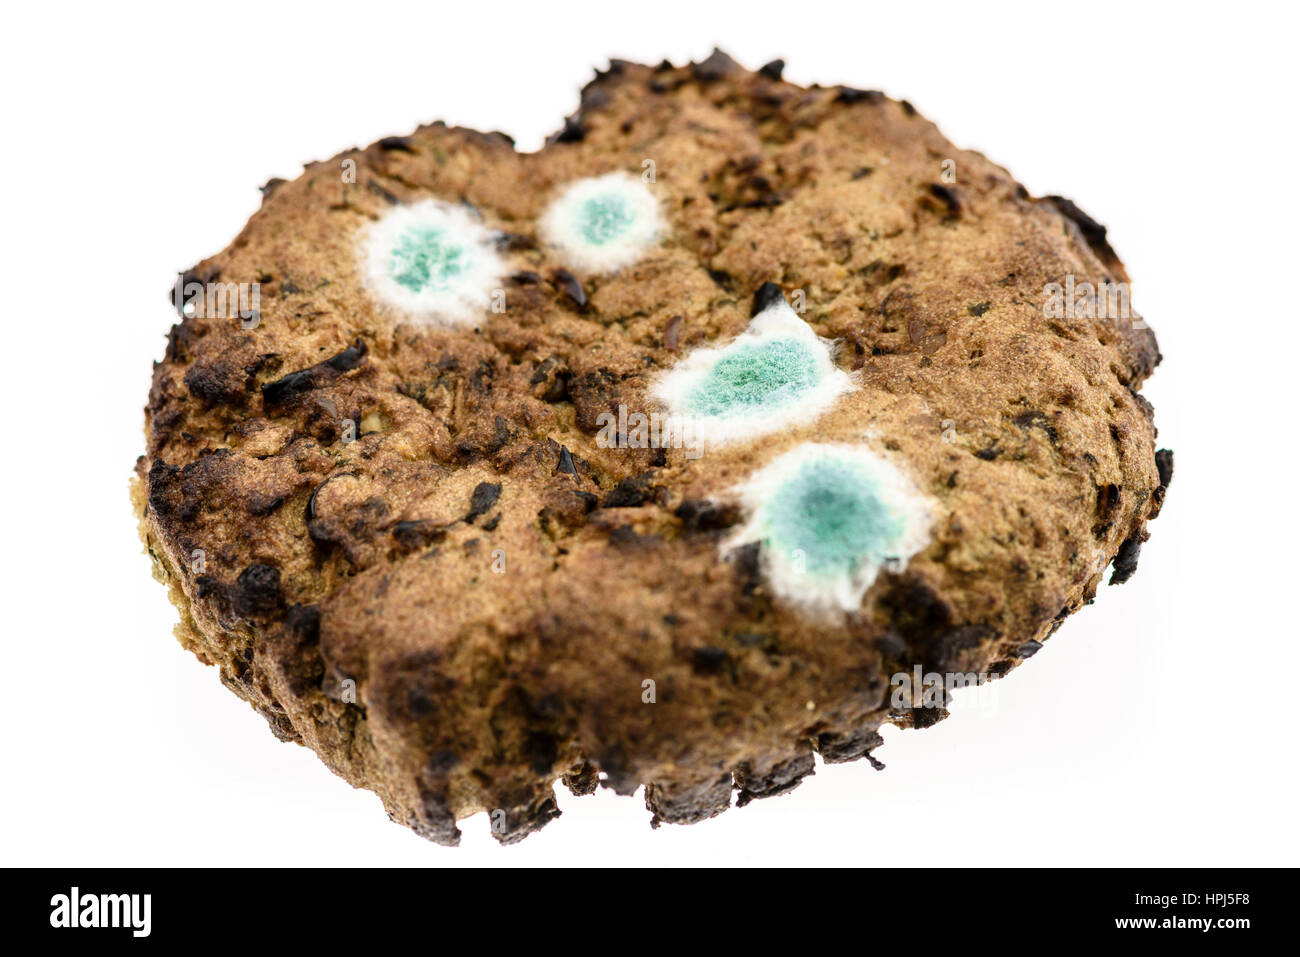 Bluemould penicillin mould growing on a vegetarian hamburger. Stock Photo